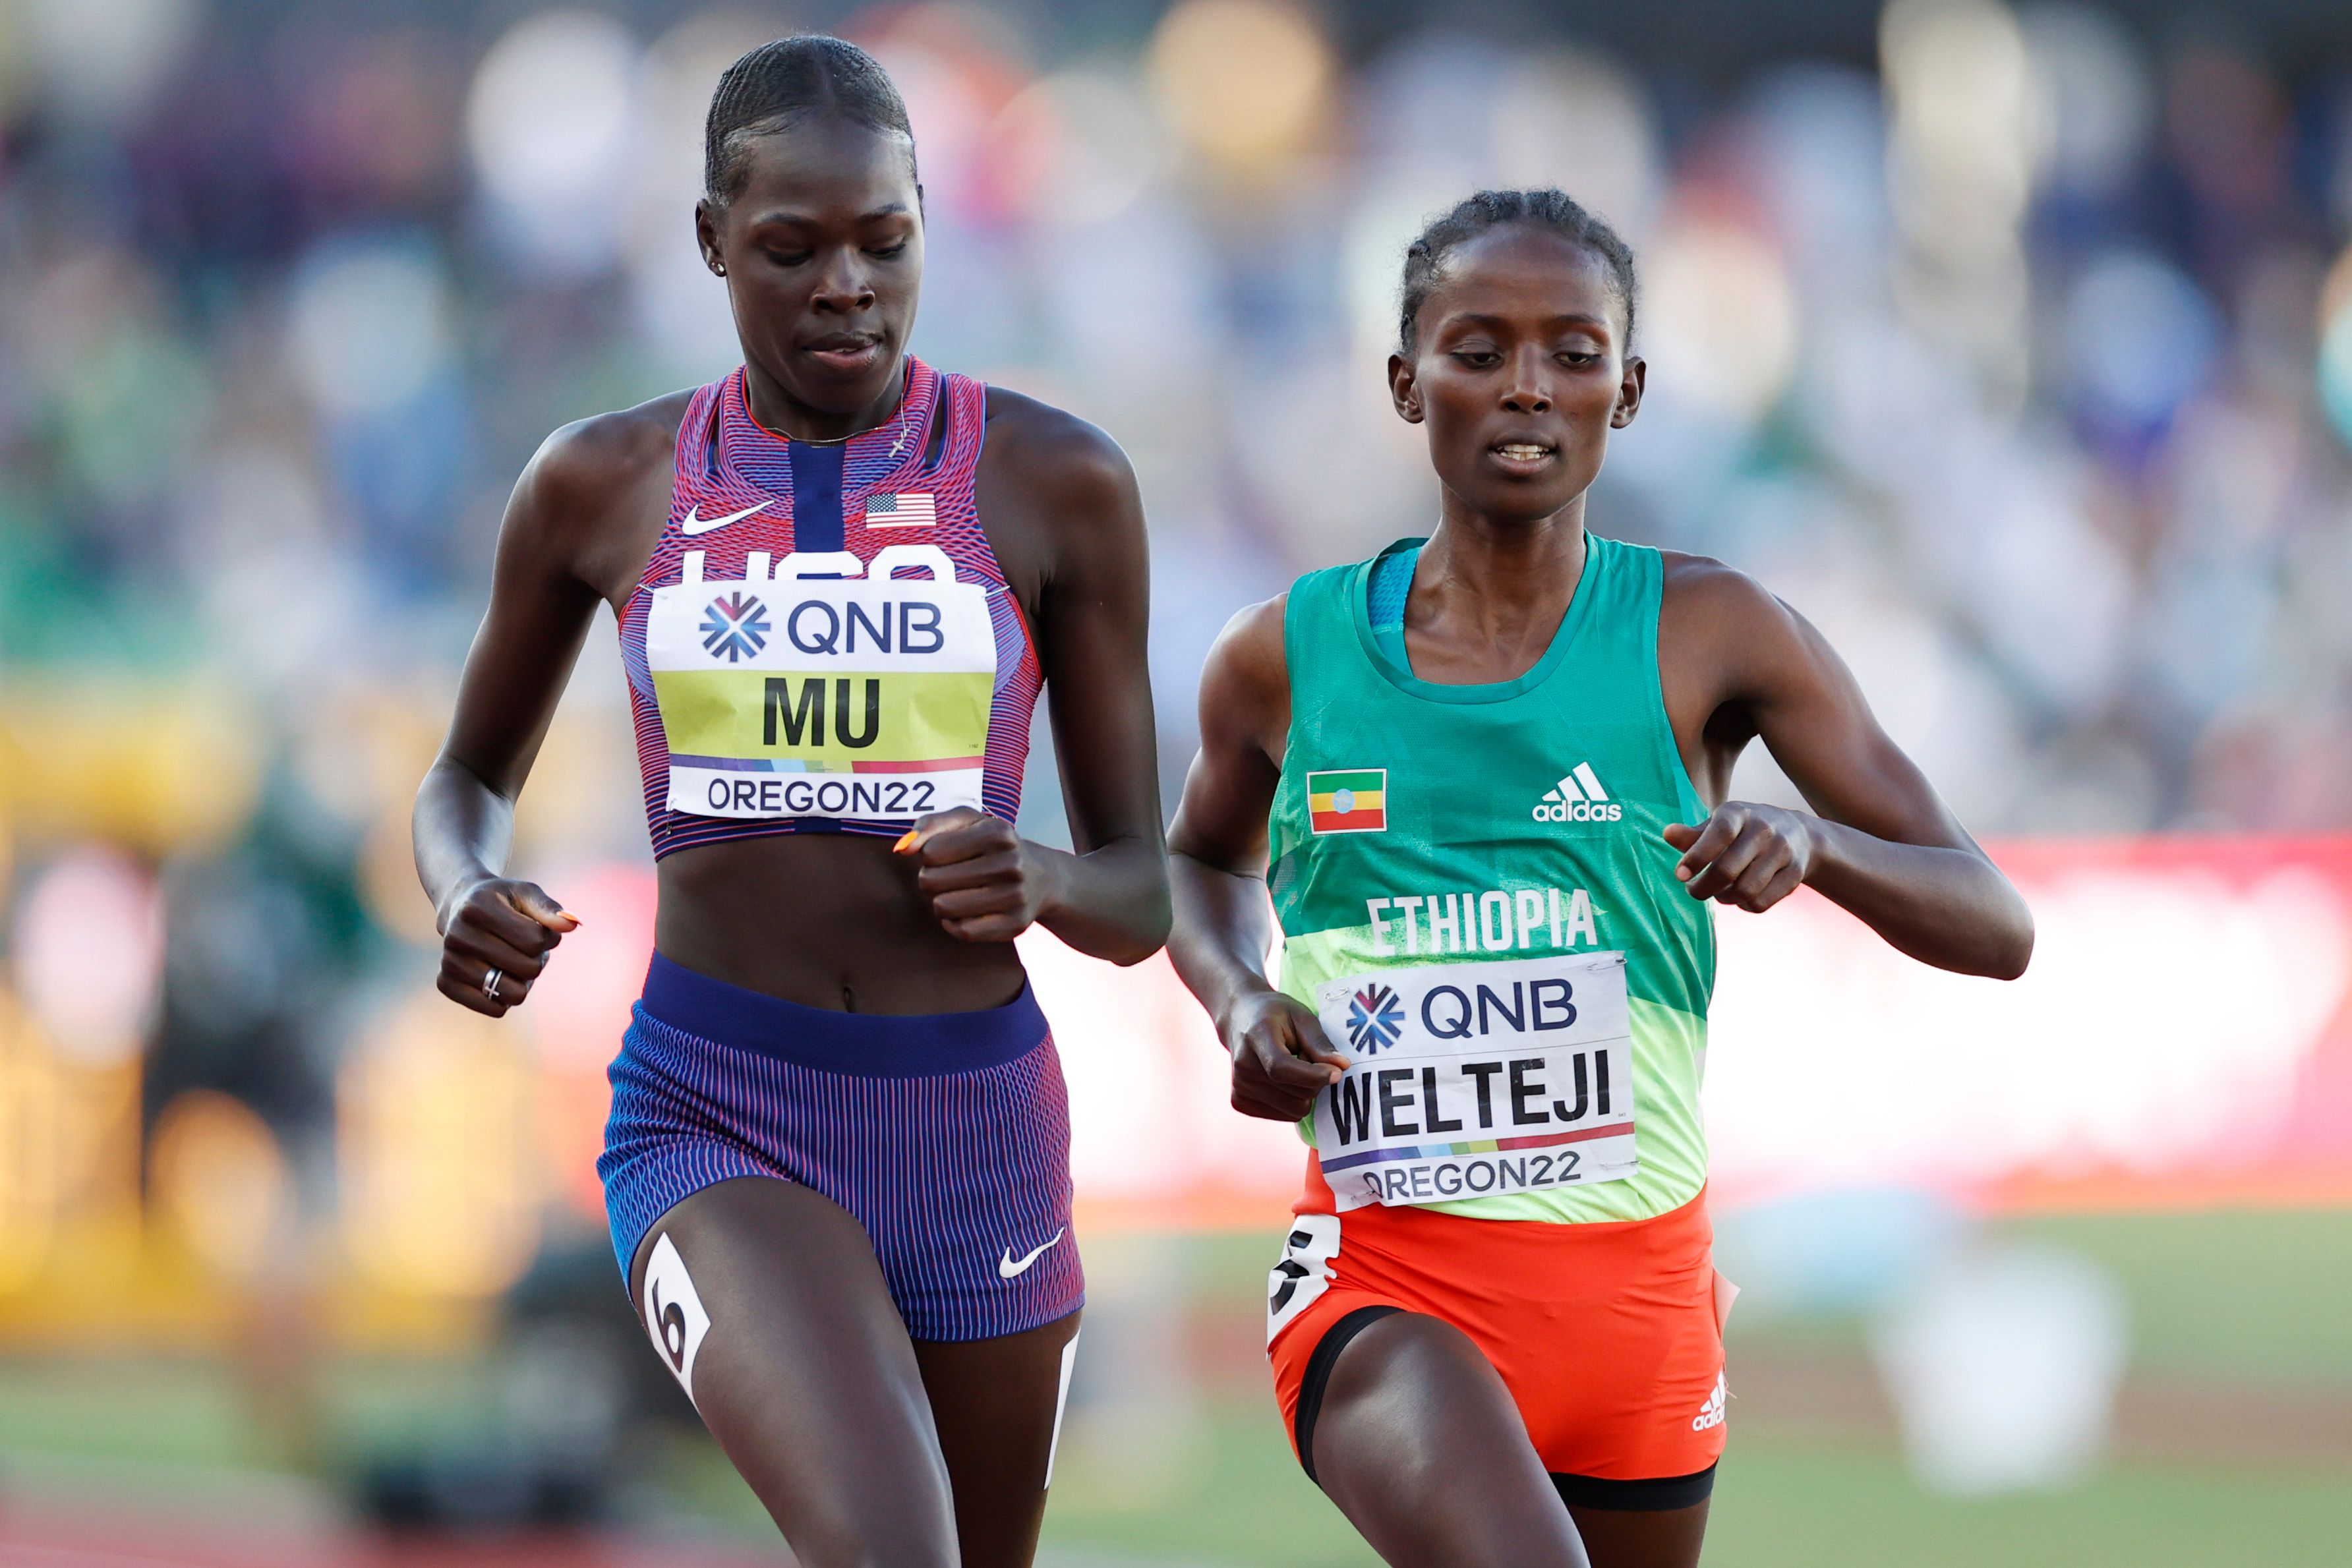 Athing Mu and Diribe Welteji at theWorld Athletics Championships Oregon22 